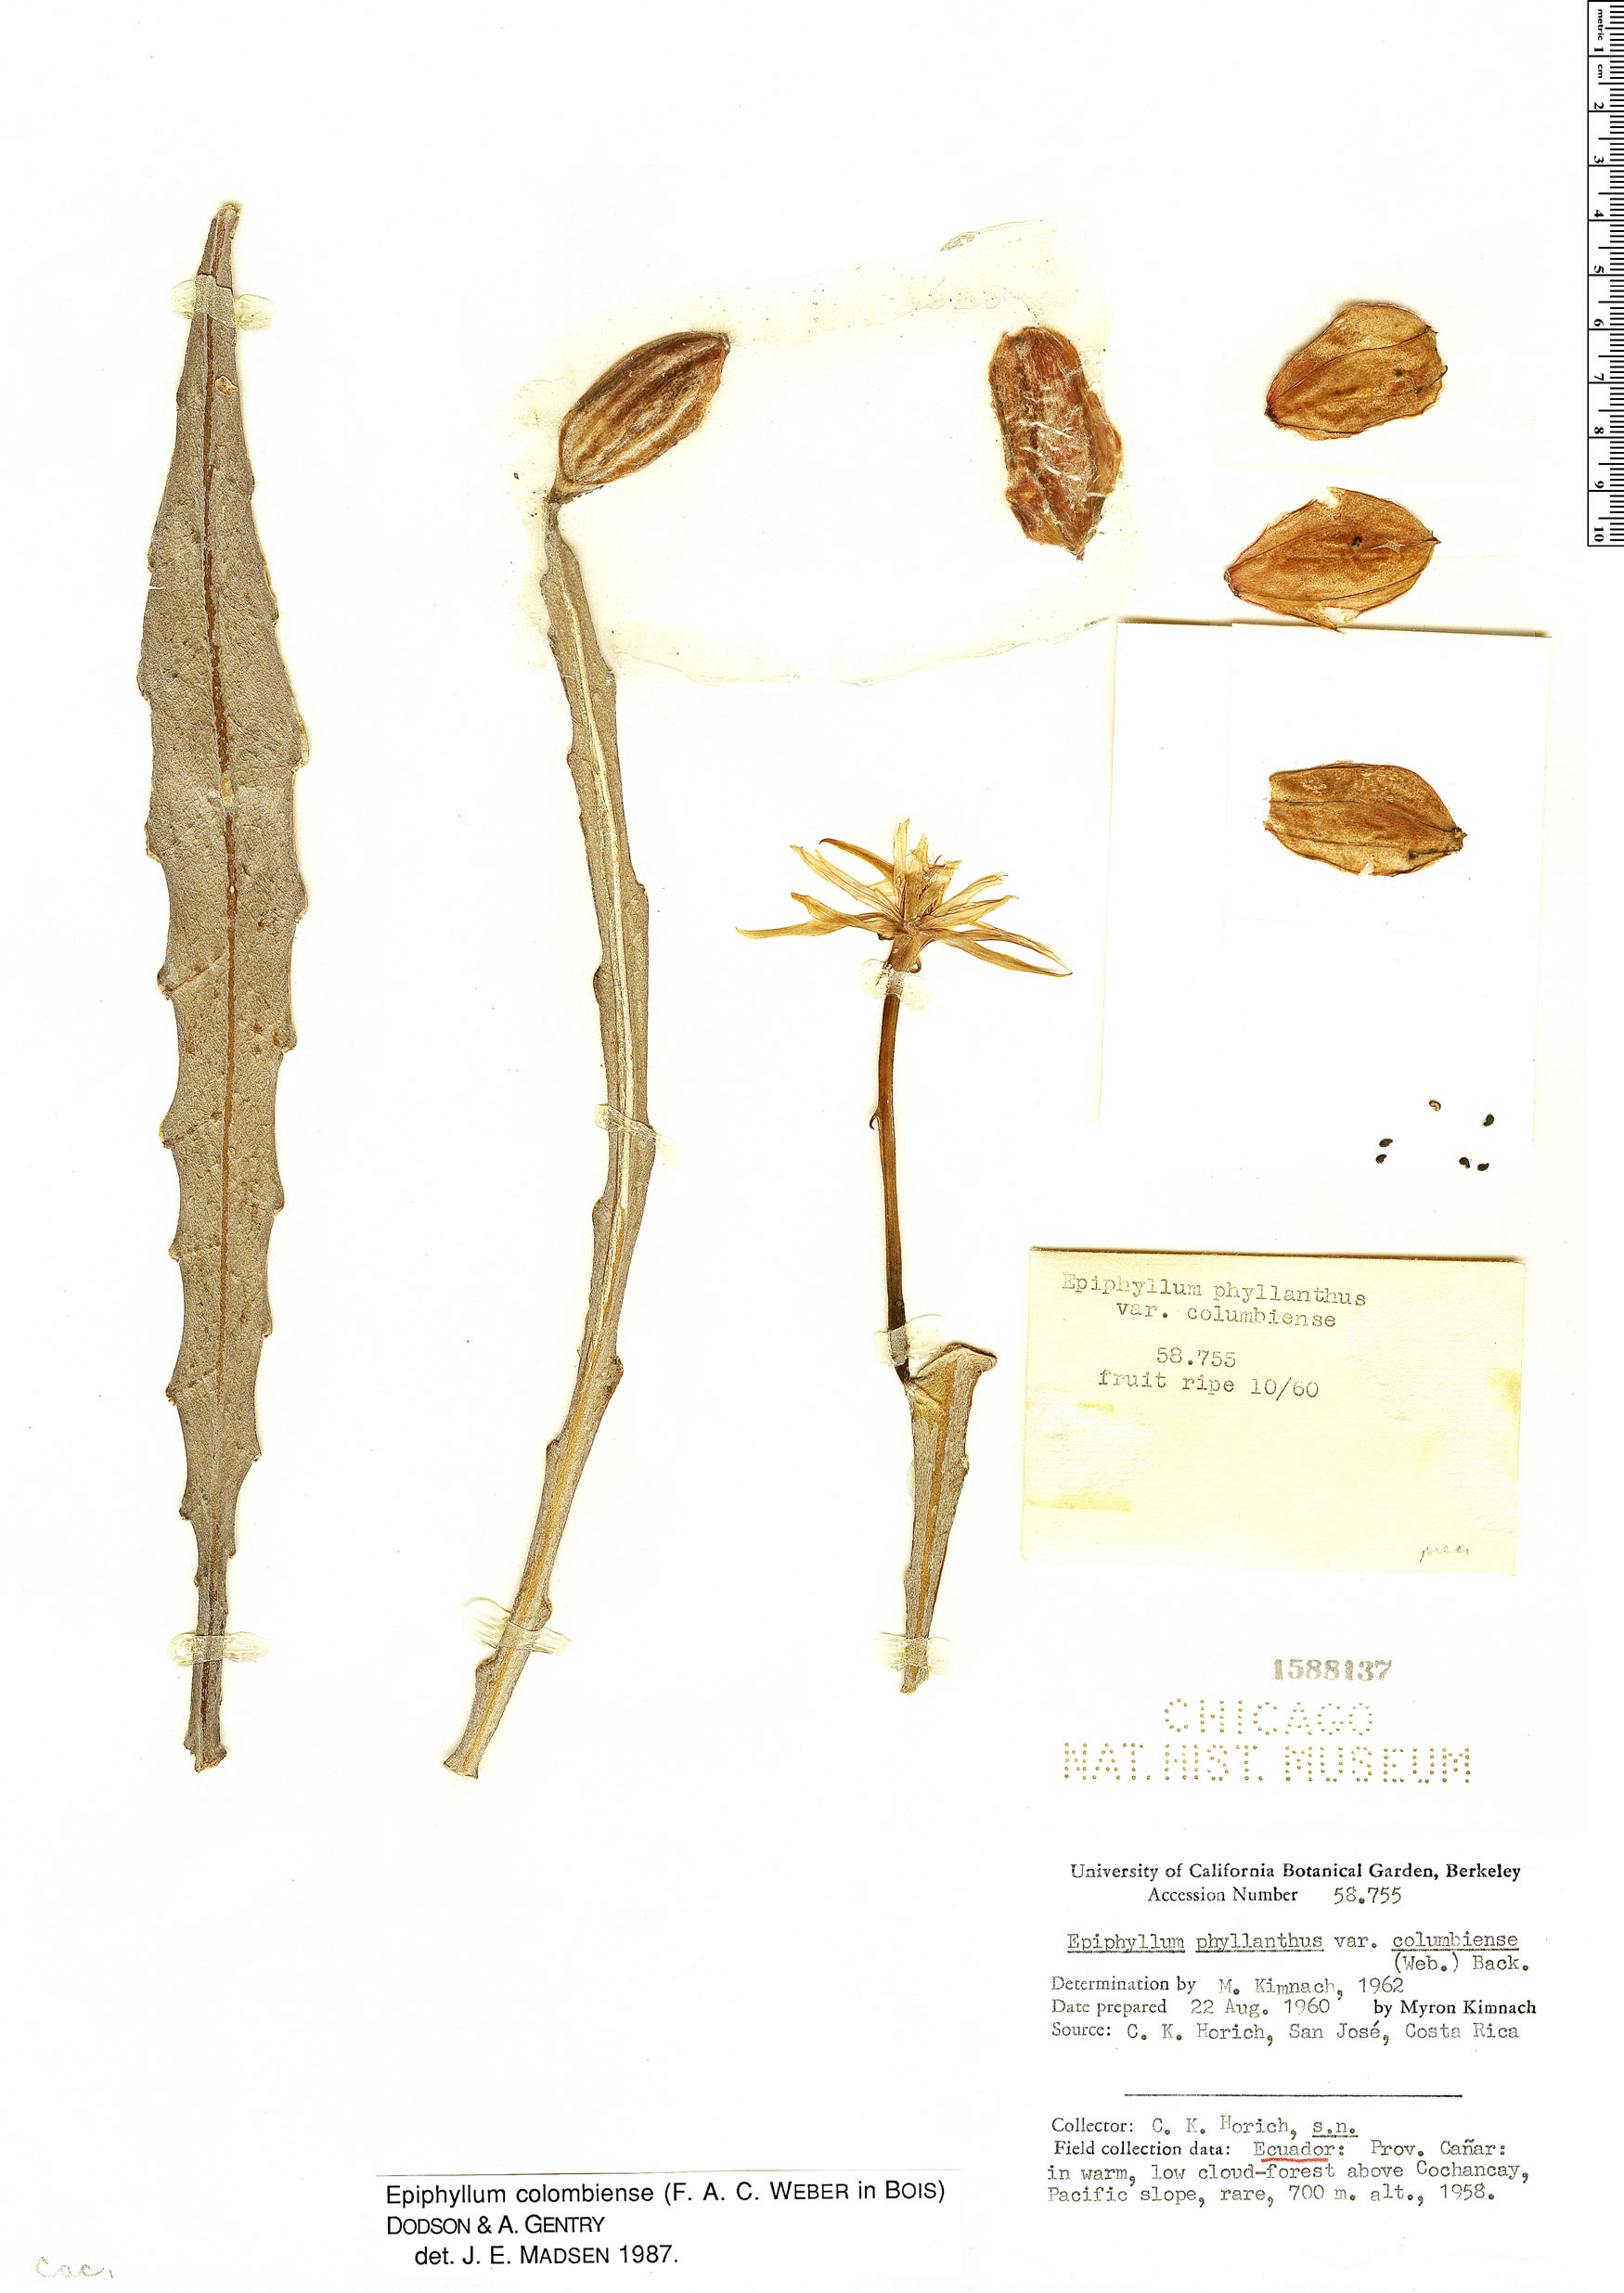 Epiphyllum phyllanthus var. columbiense image